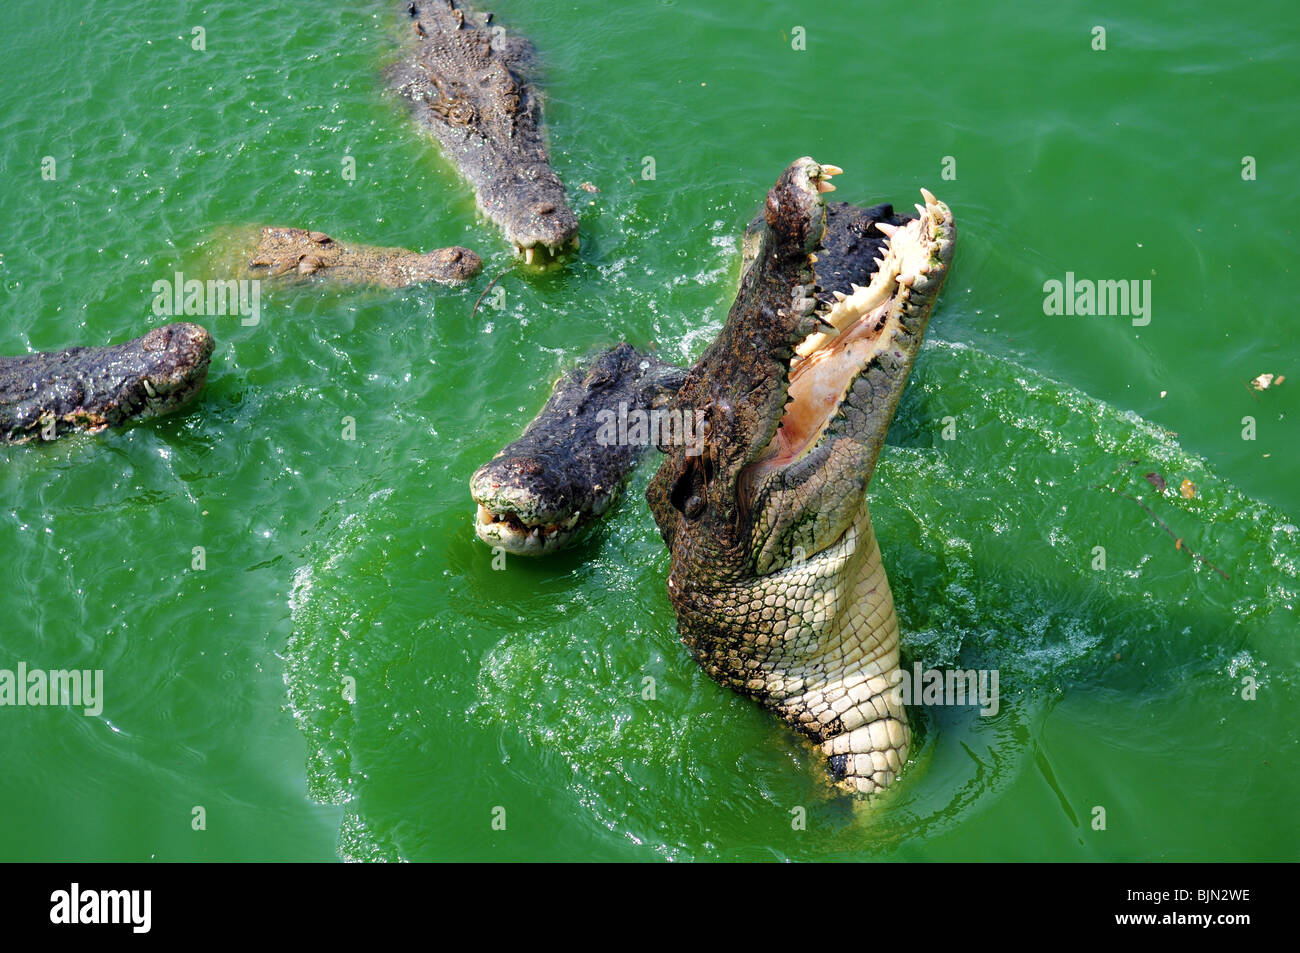 Crocodile Attack In The Green River Water Stock Photo 28737450